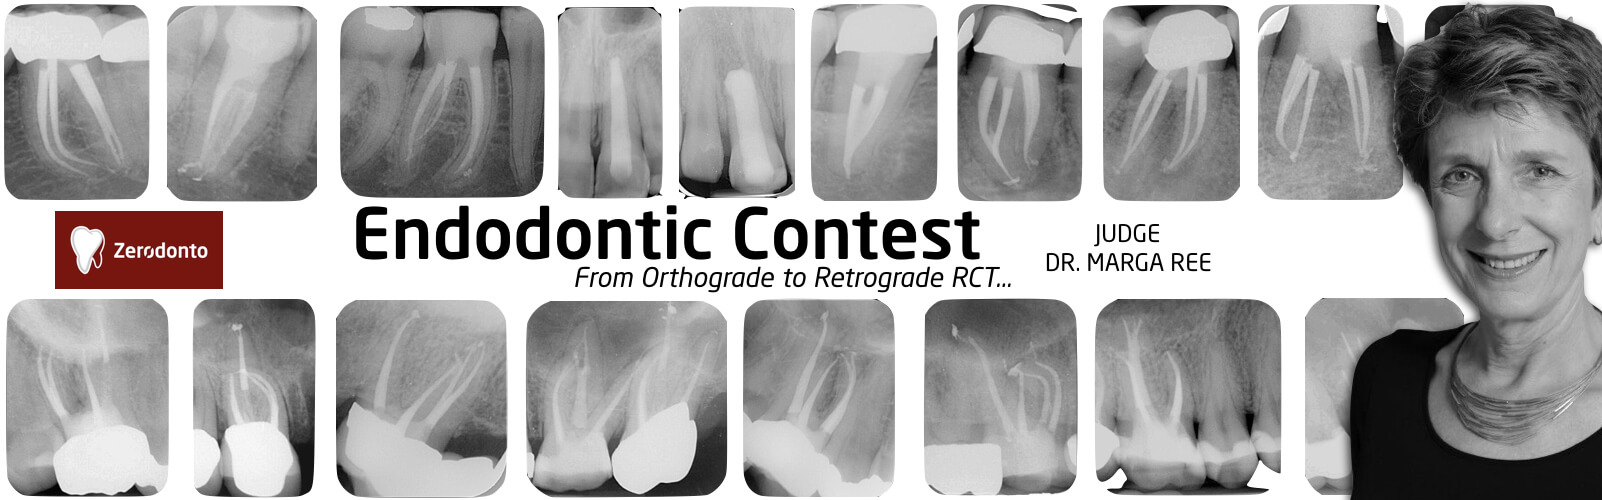 Endodontic Contest - from Retrograde to Orthograde RCT - contest #5, marga ree